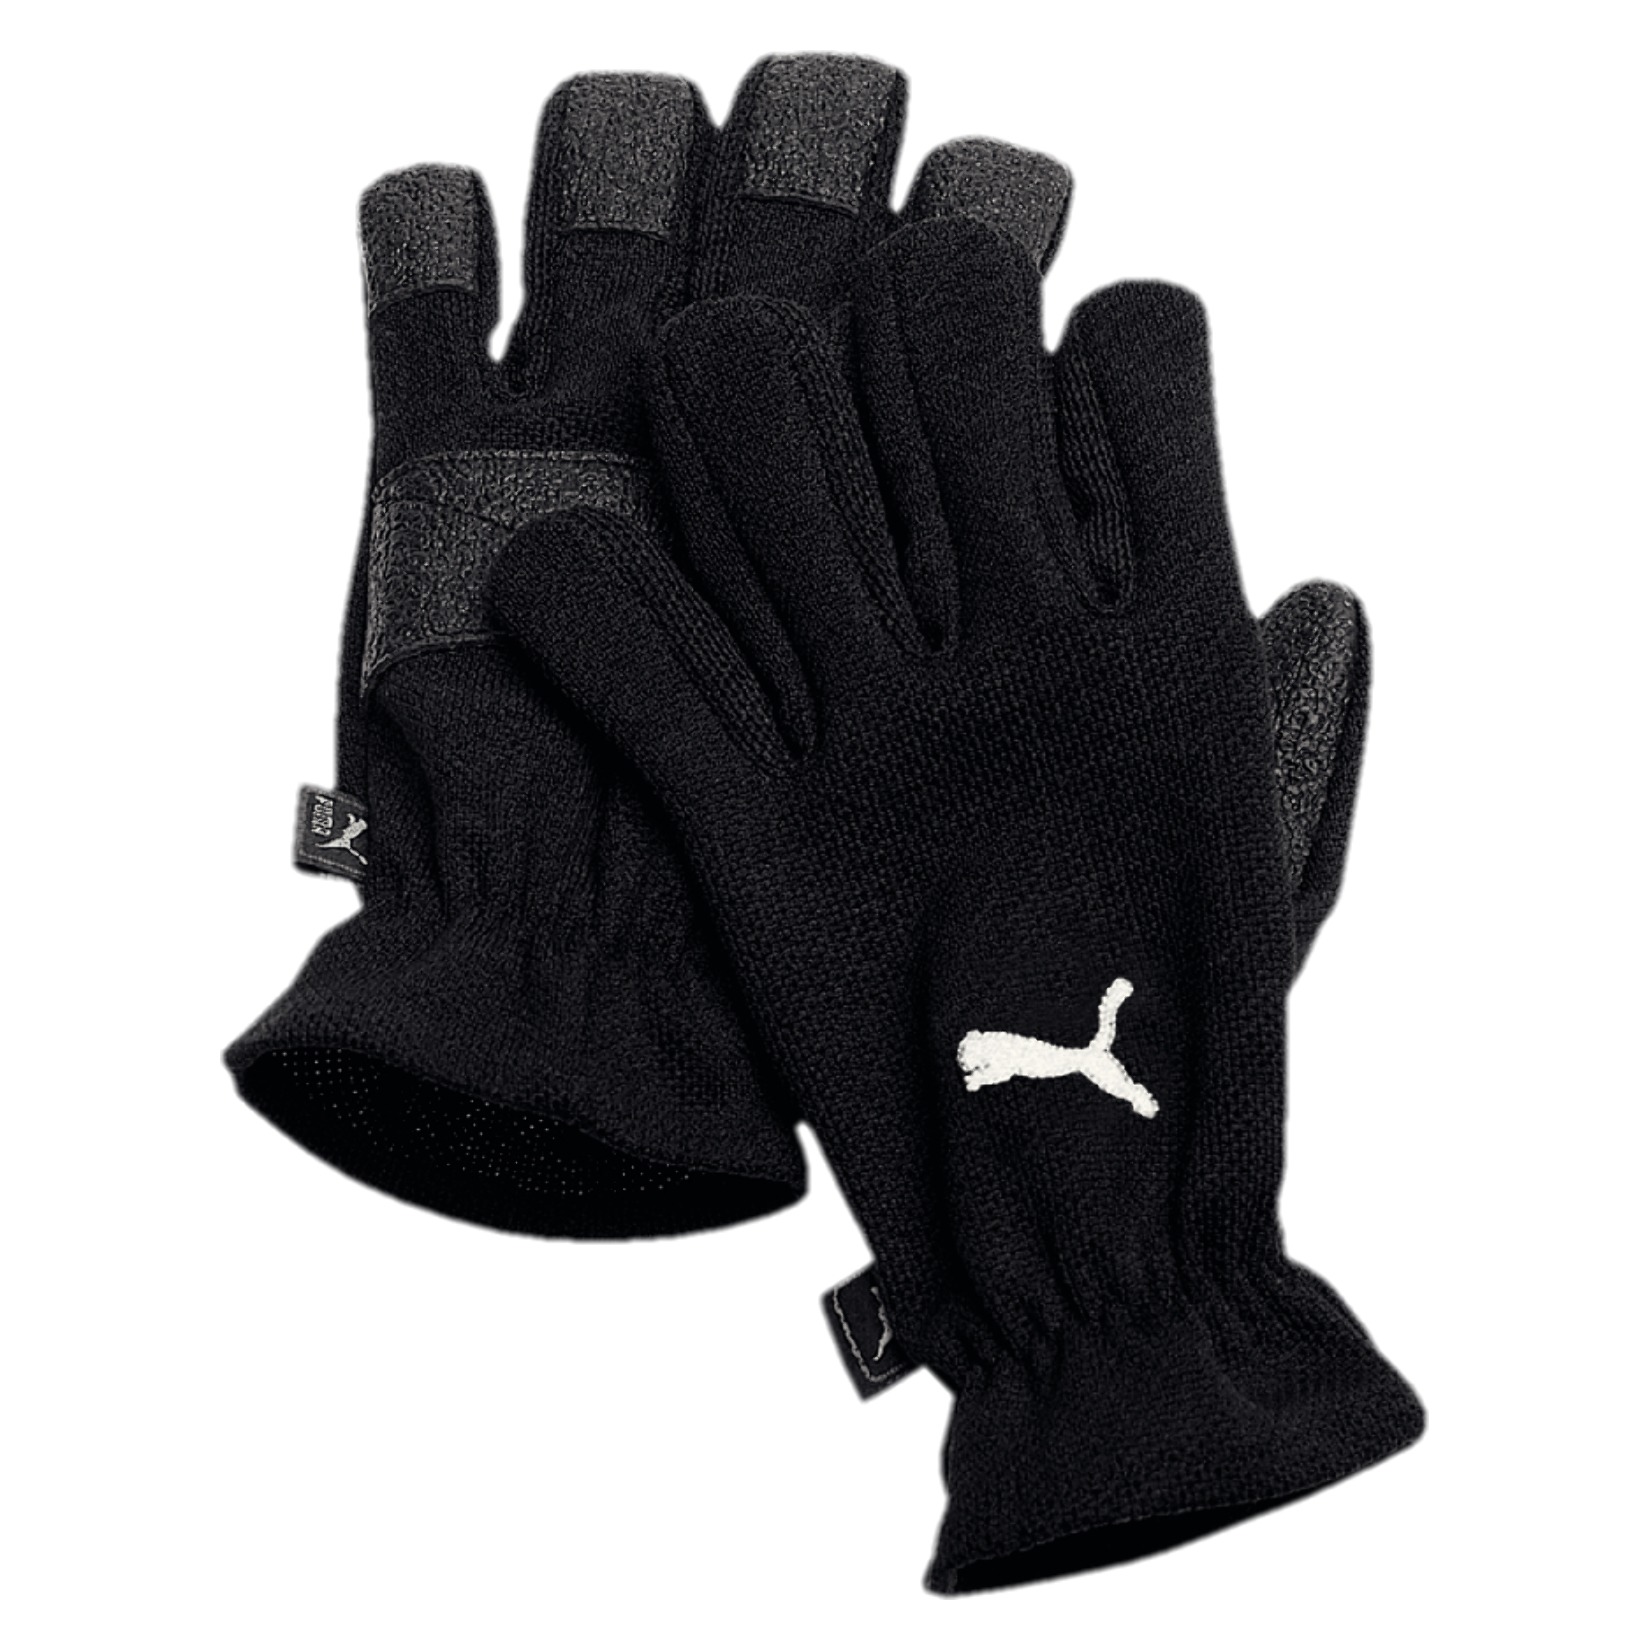 Puma Winter Players Gloves - Kitlocker.com